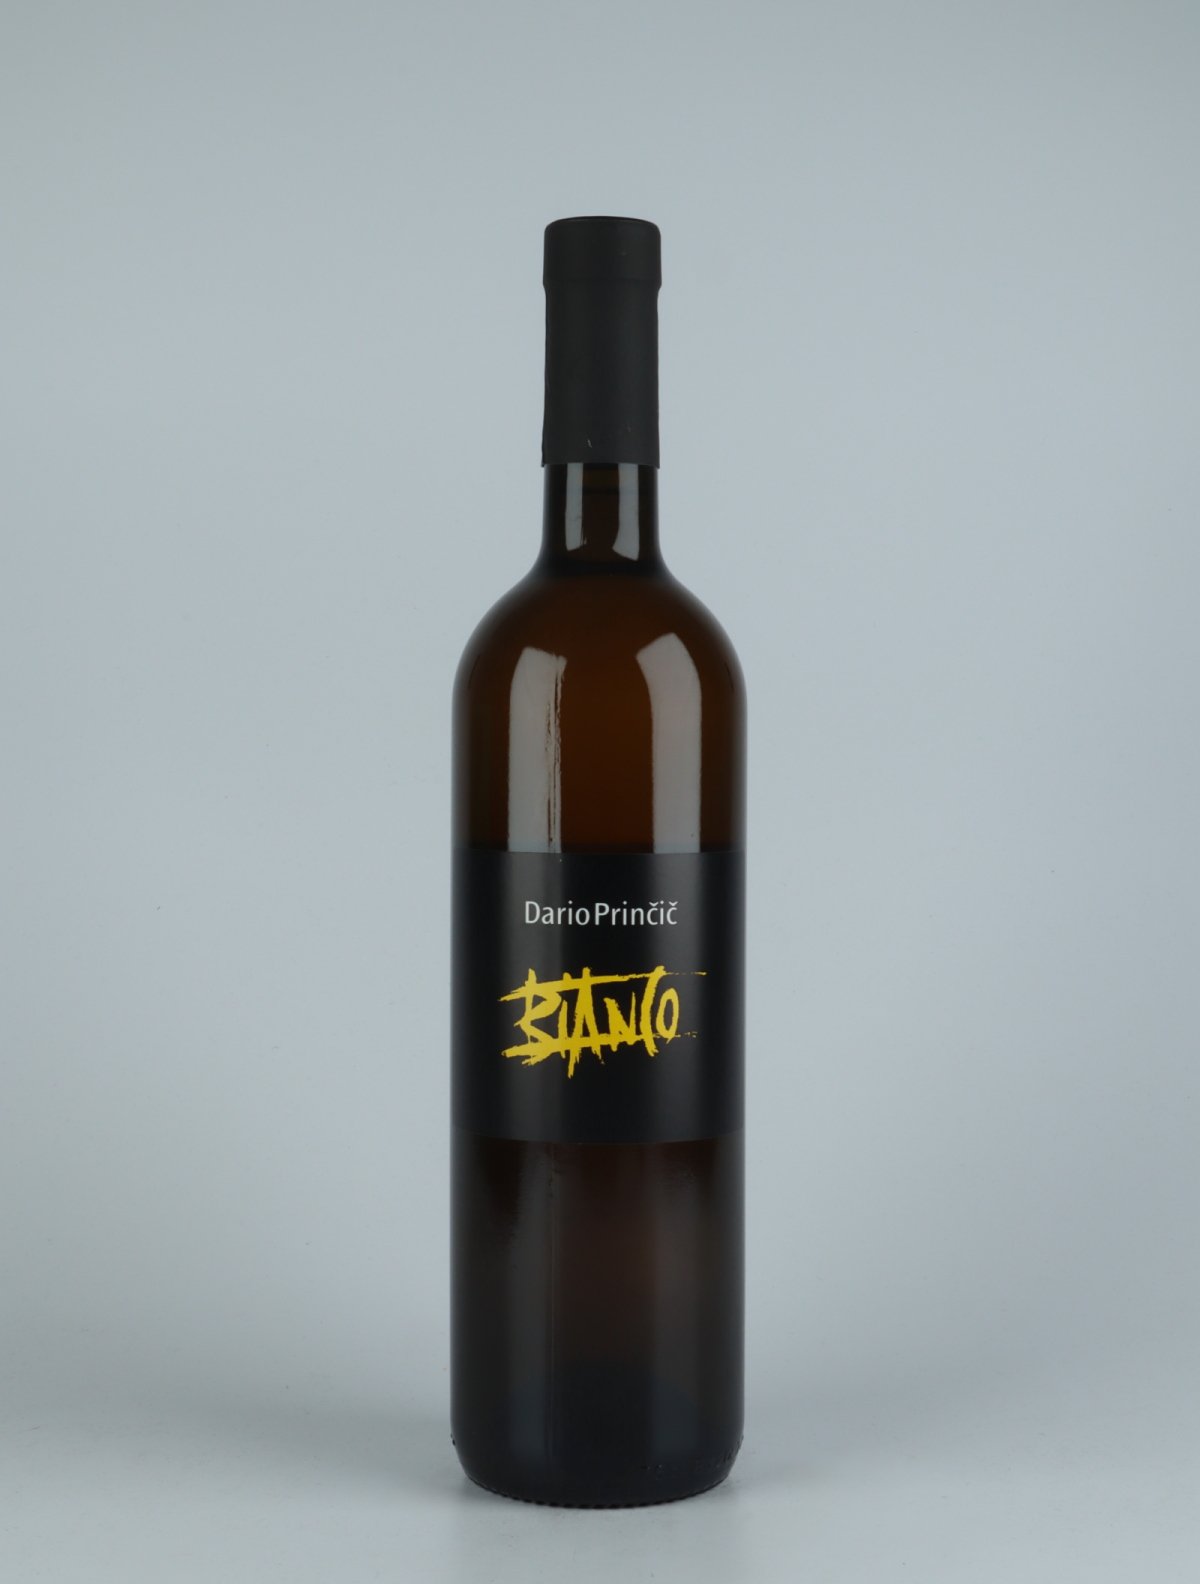 A bottle 2019 Bianco Orange wine from Dario Princic, Friuli in Italy